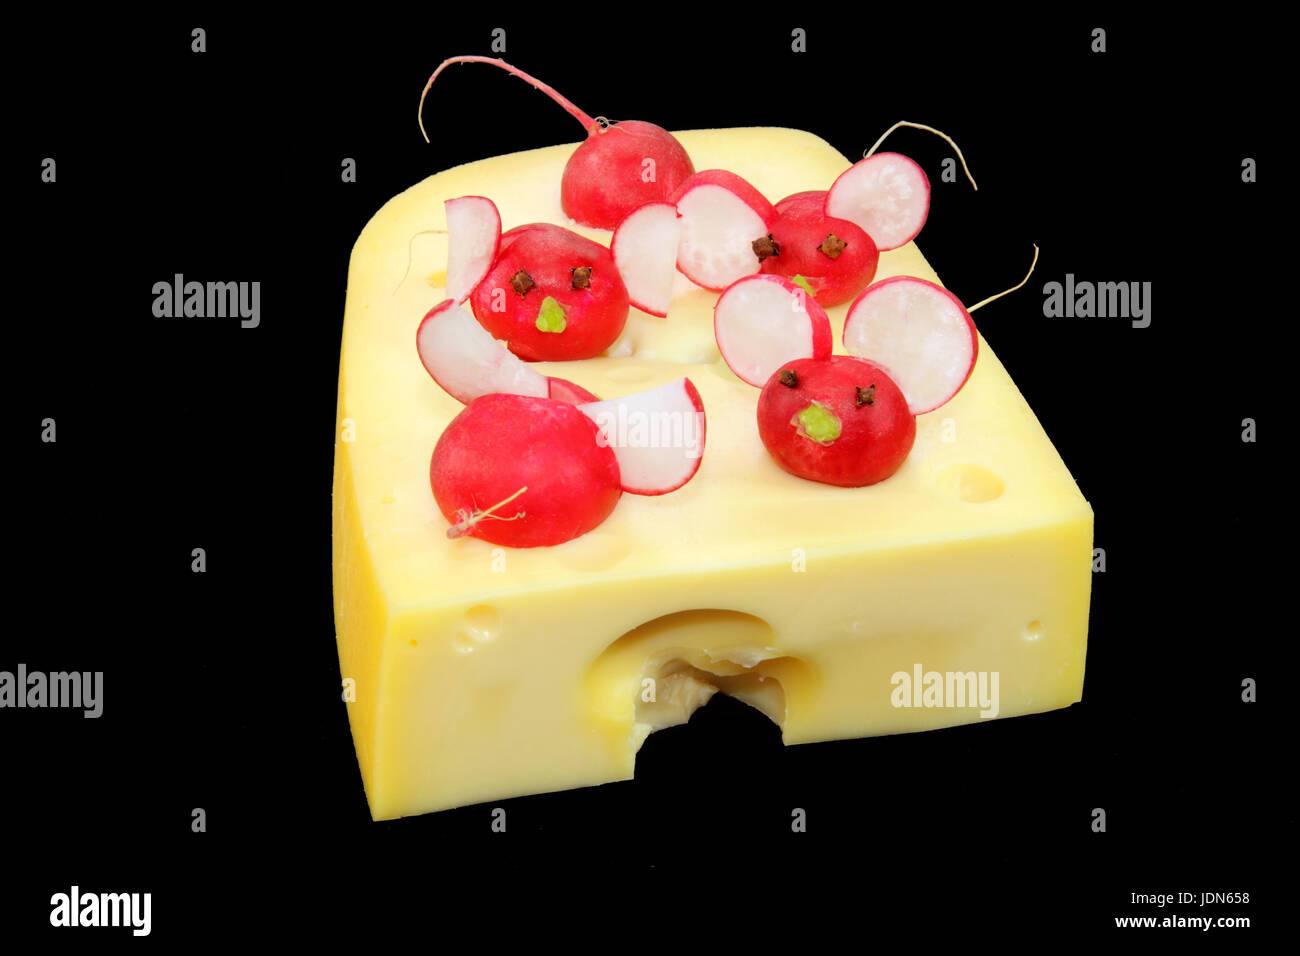 https://c8.alamy.com/comp/JDN658/fresh-garnished-radish-with-piece-of-cheese-JDN658.jpg